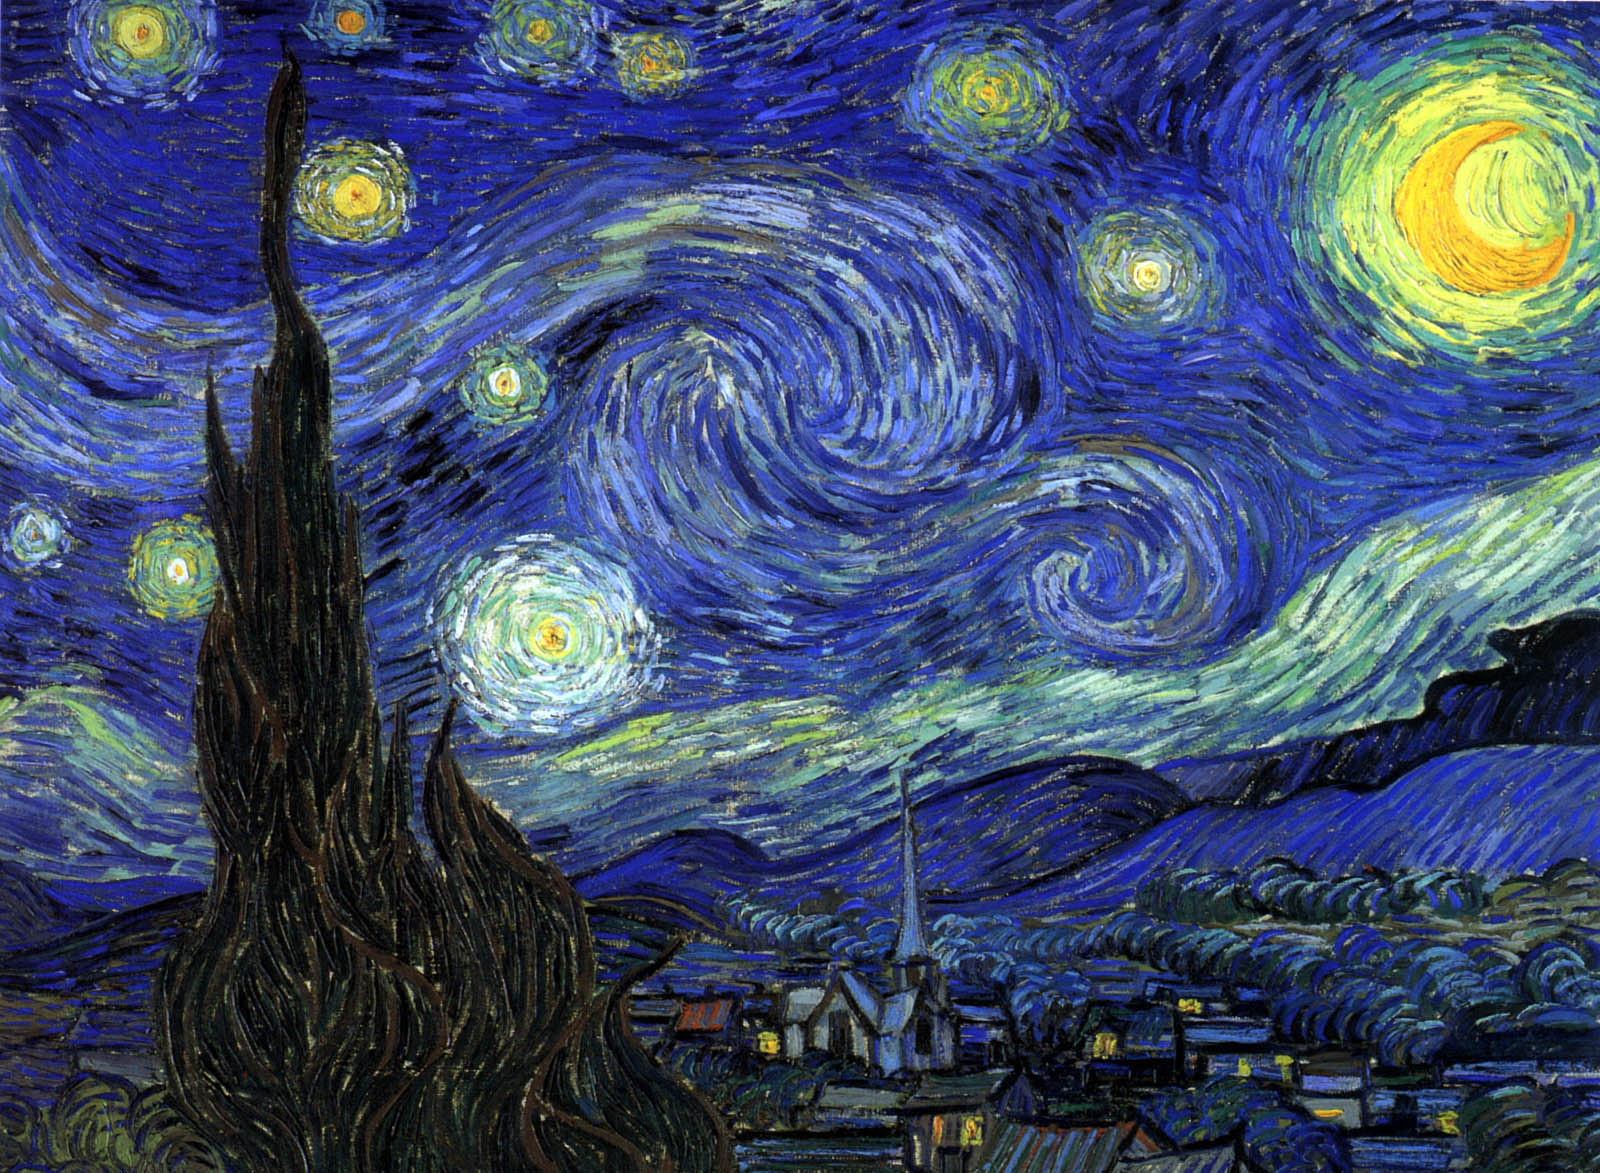 My Great Paintings: Painting Parody of Vincent Van Gogh's 